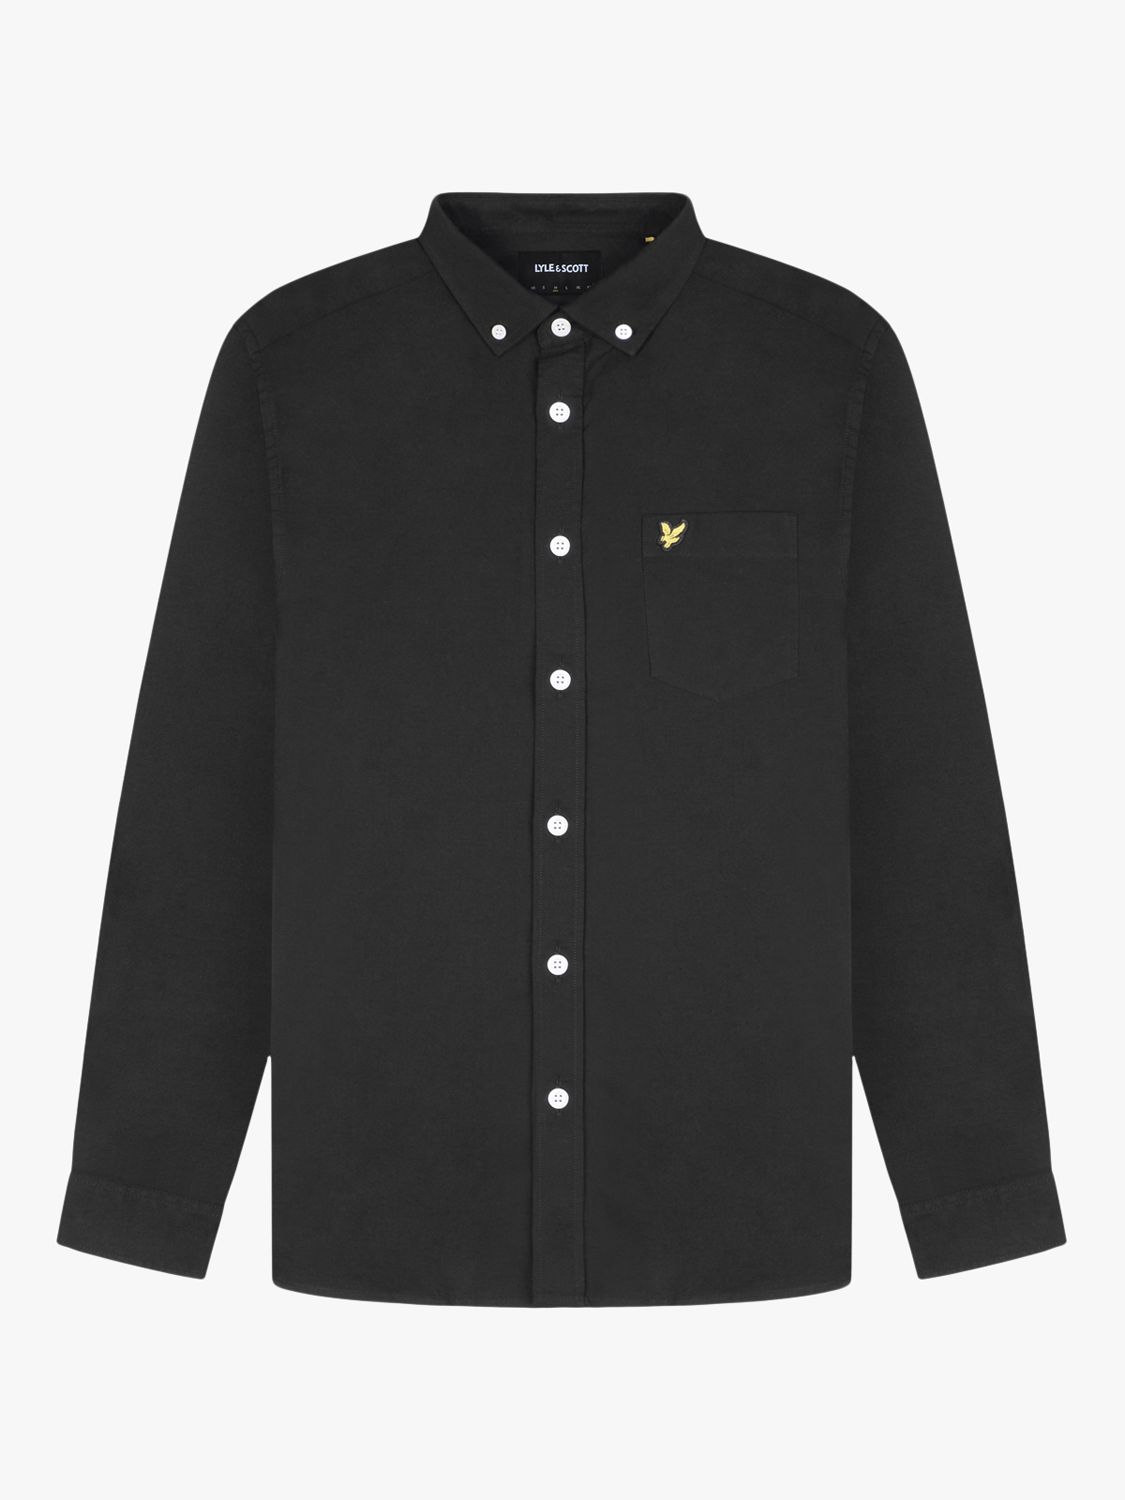 Lyle & Scott Regular Fit Oxford Shirt, Jet Black, L